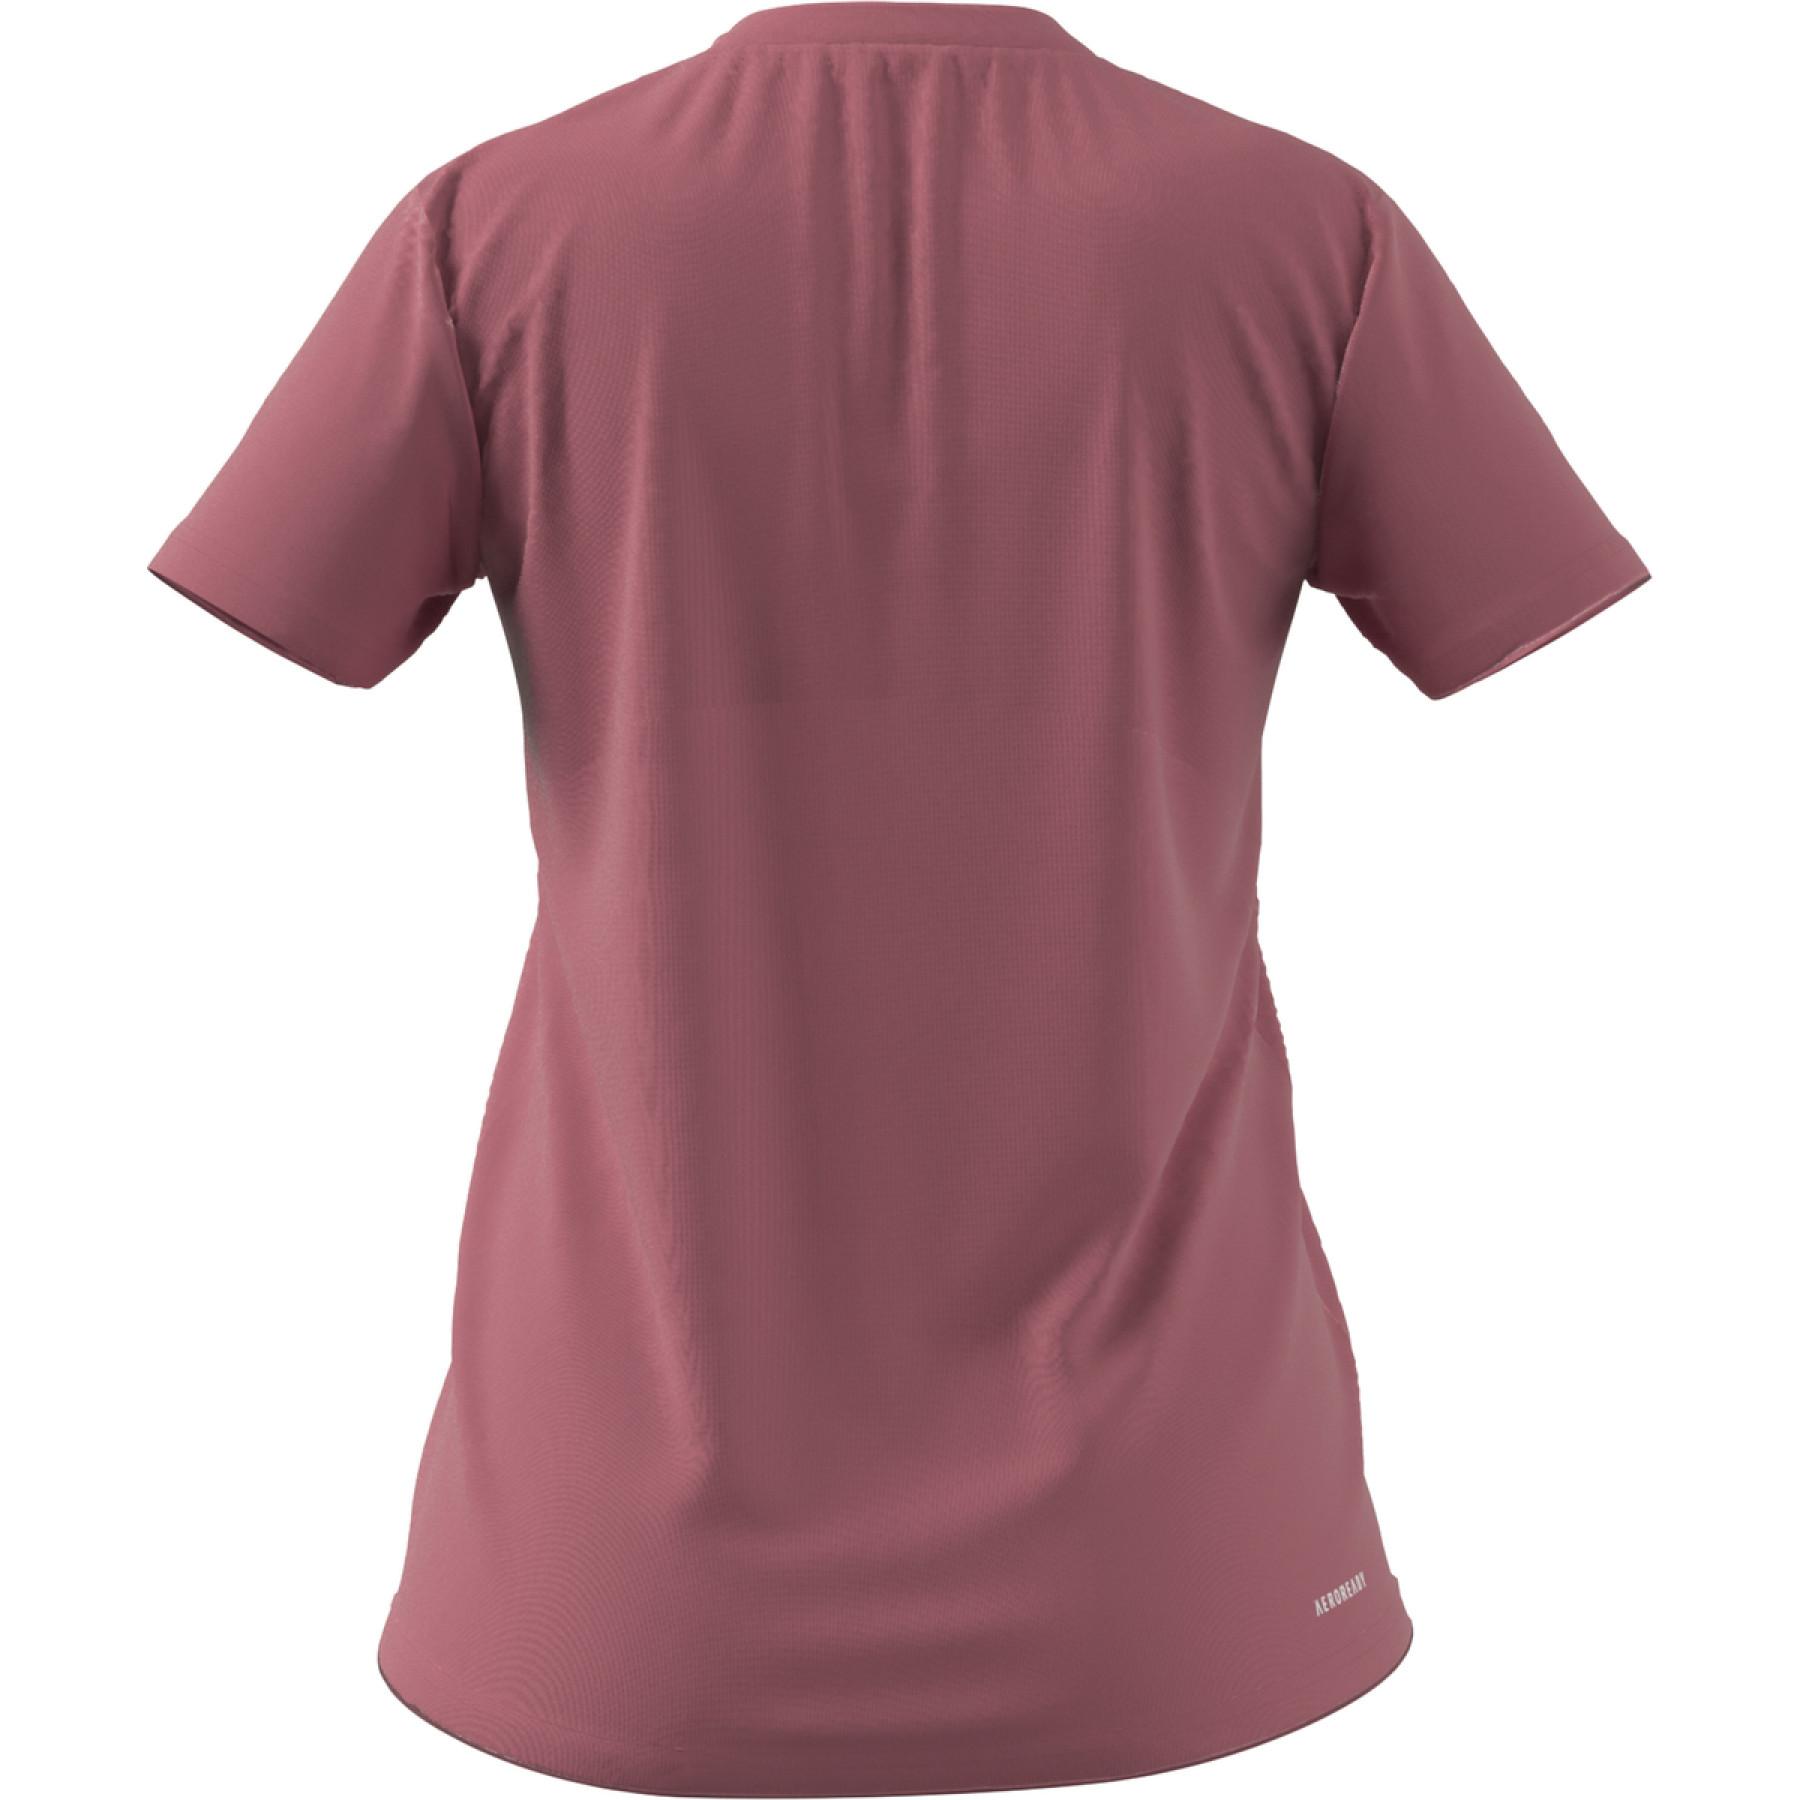 Camiseta feminina adidas Aeroready Designed 2 Move Sport